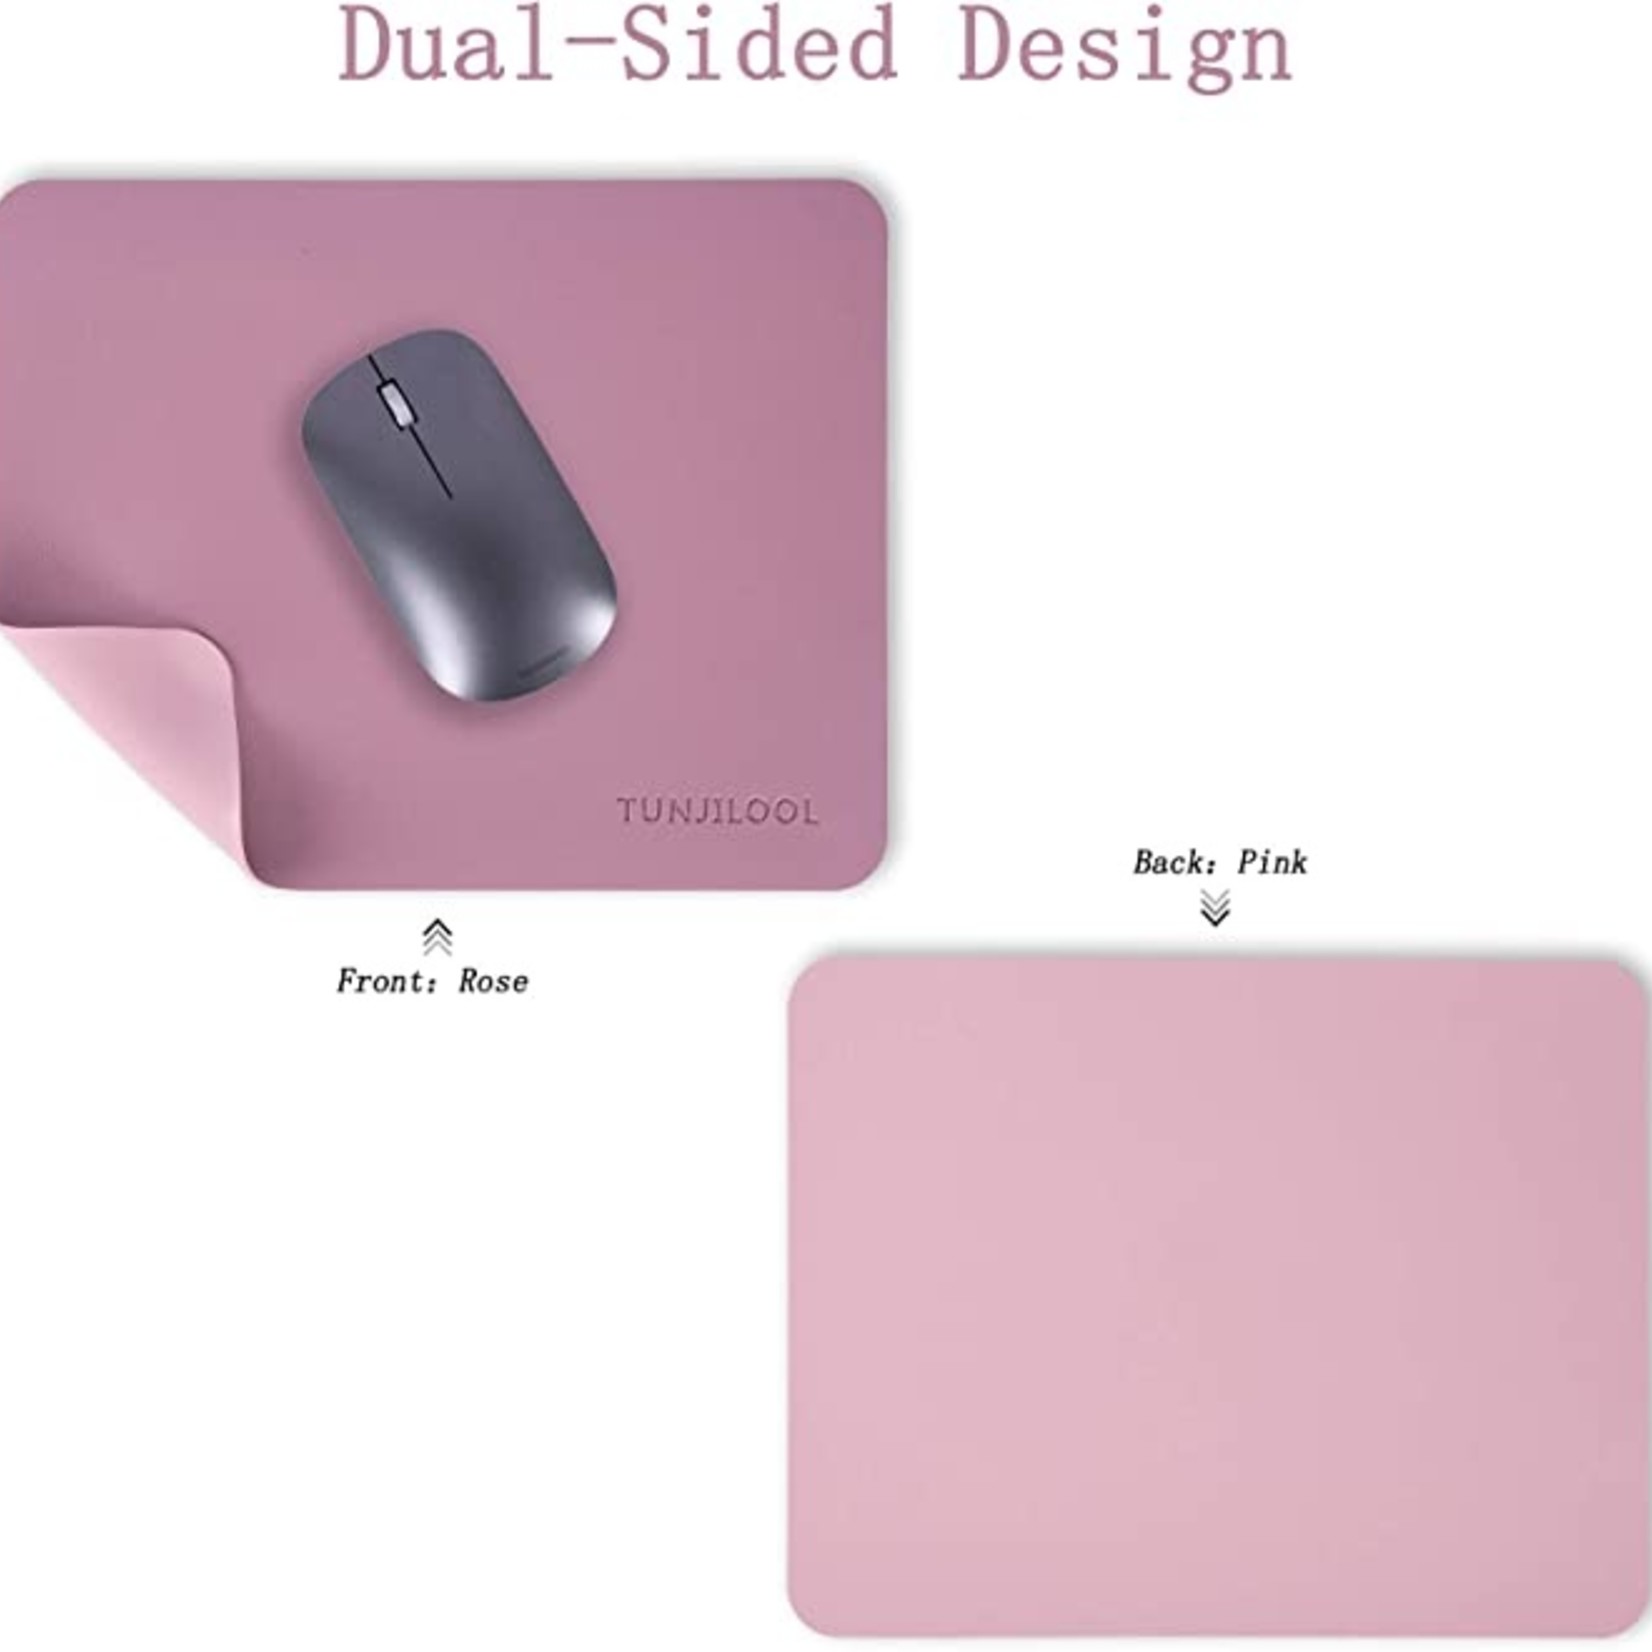 Tunjilool Leather Mouse Pad- Pink/Purple